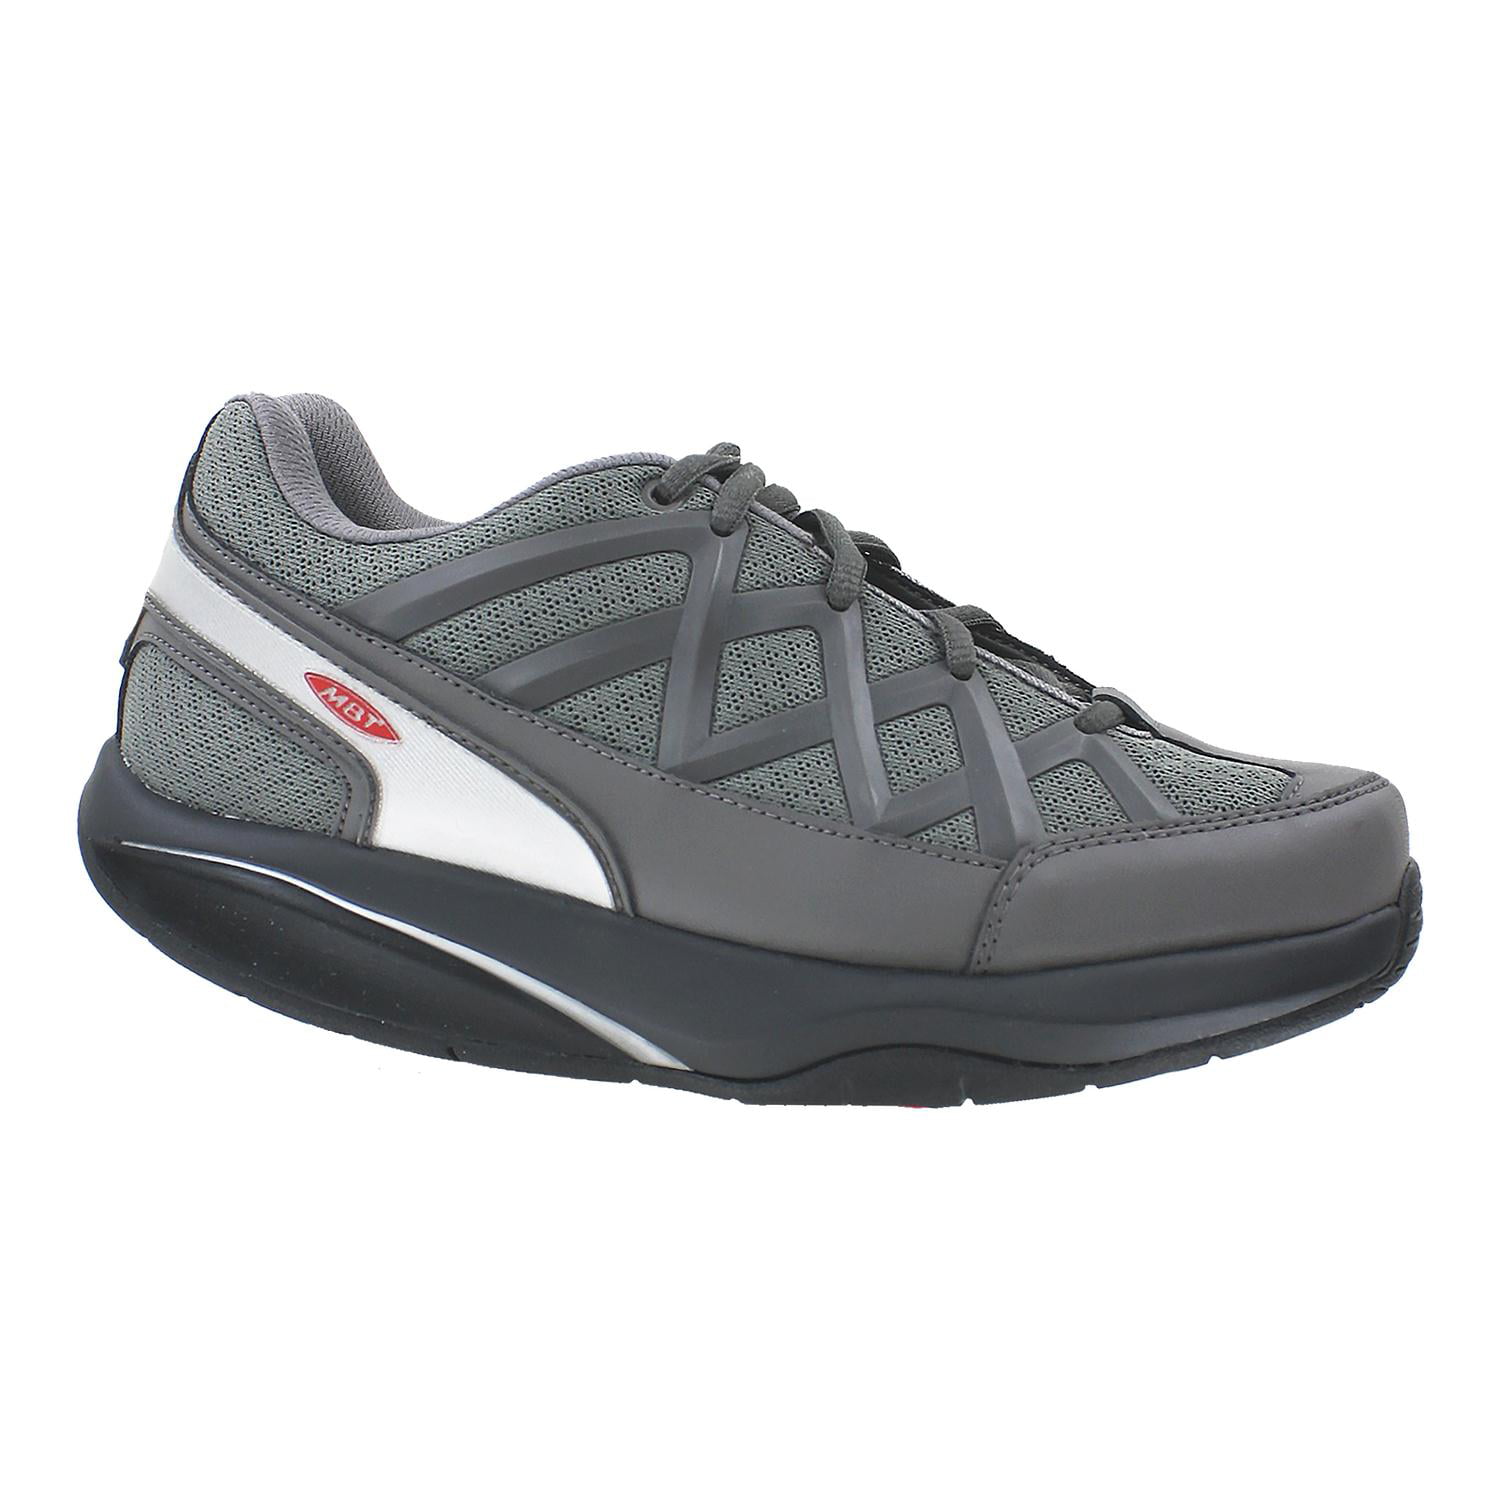 Arbejdskraft Uenighed Dynamics MBT Men's Sport 3 Walking Shoes EU 41 / US 7-7.5 Gull Gray - Walmart.com